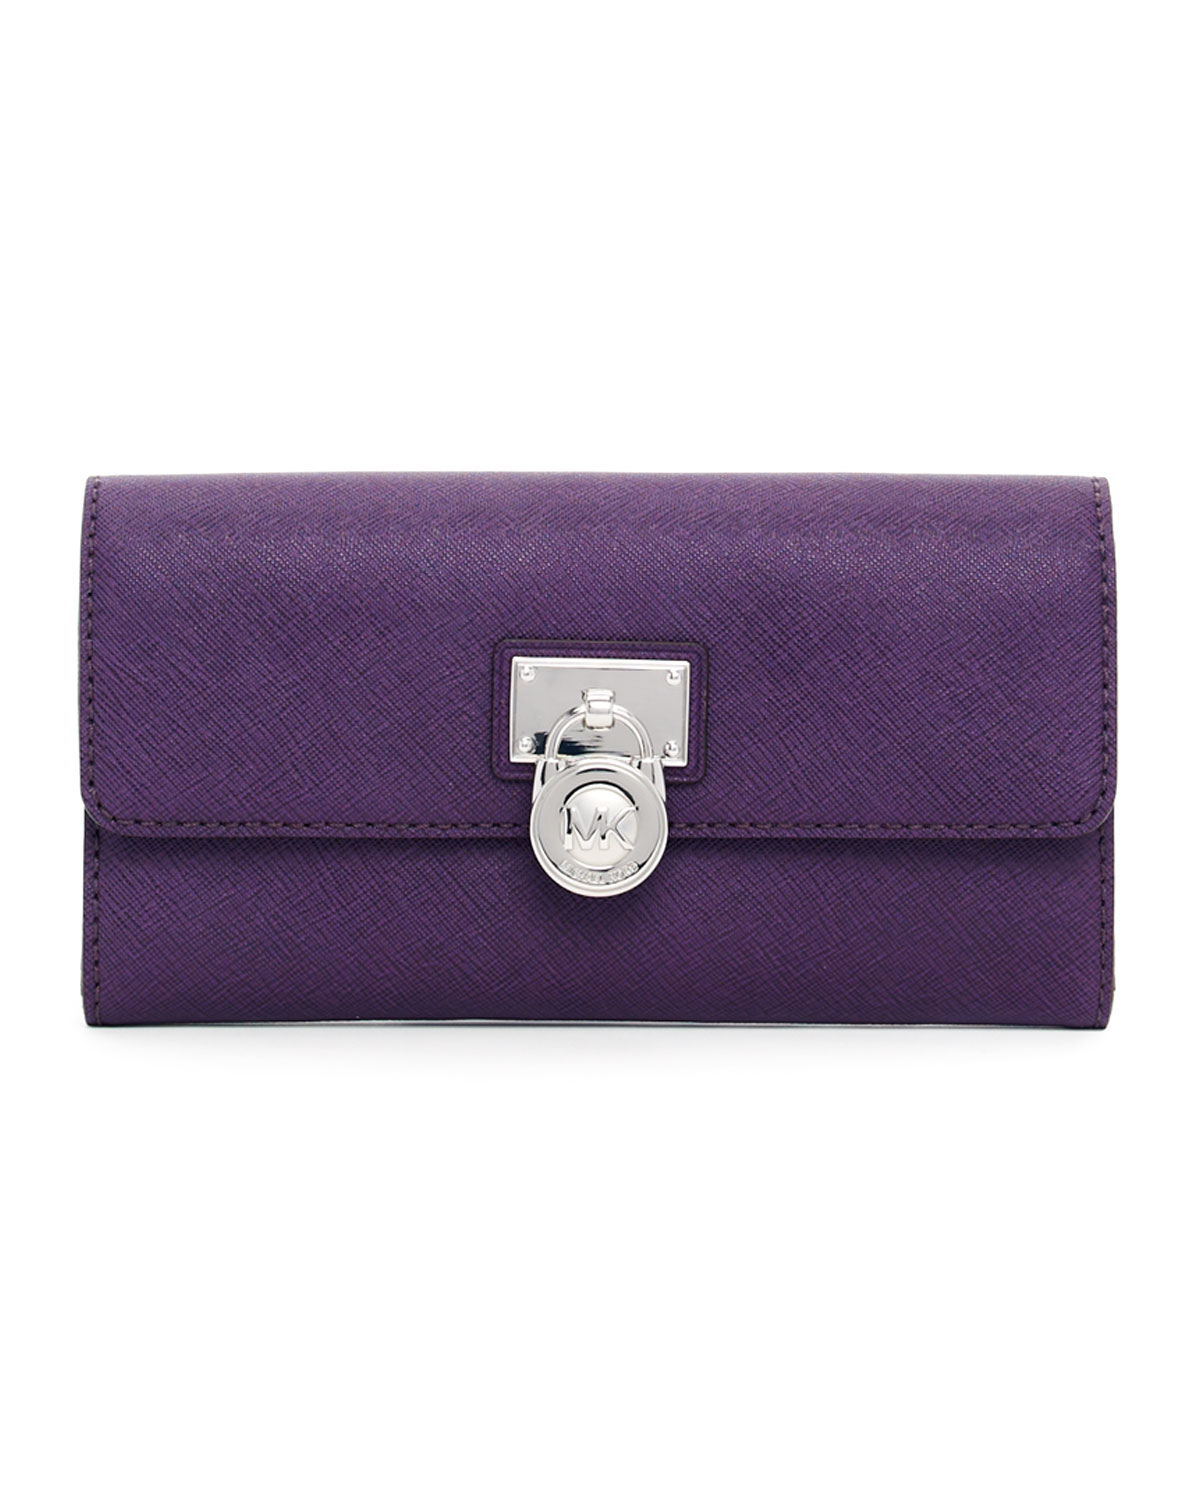 Lyst - Michael Michael Kors Hamilton Large Saffiano Wallet in Purple